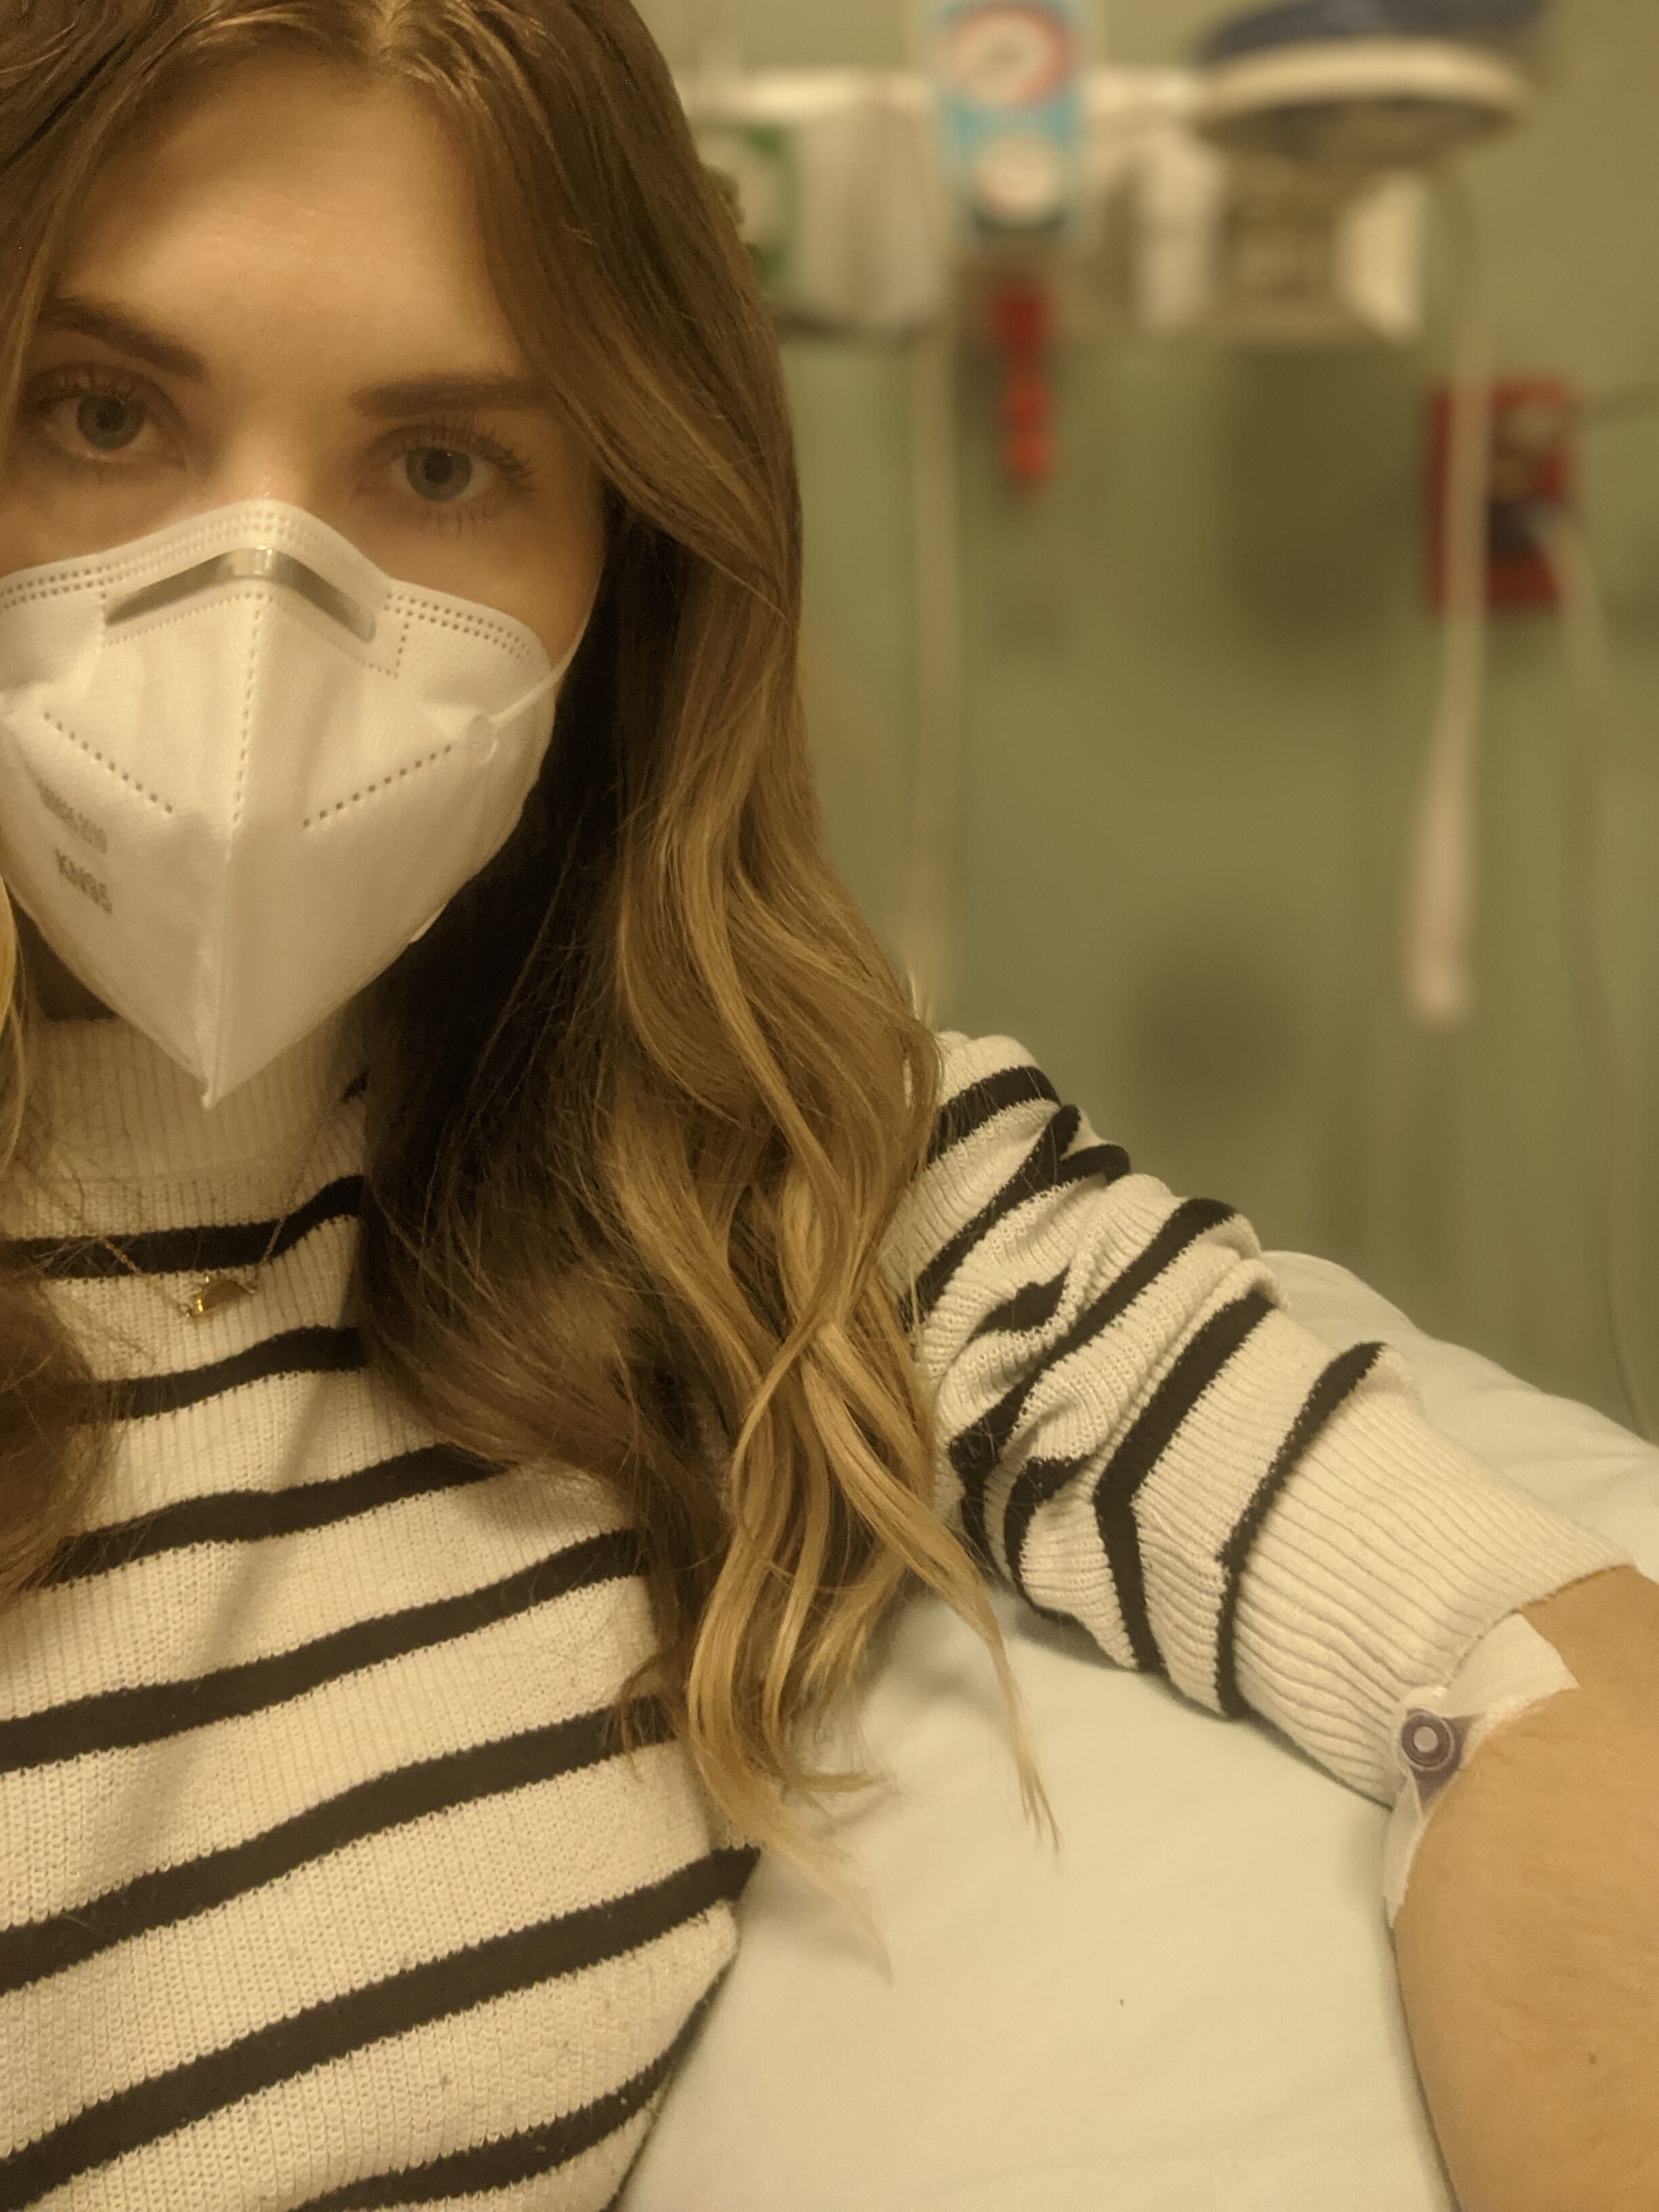 kelsey owens wearing a medical mask